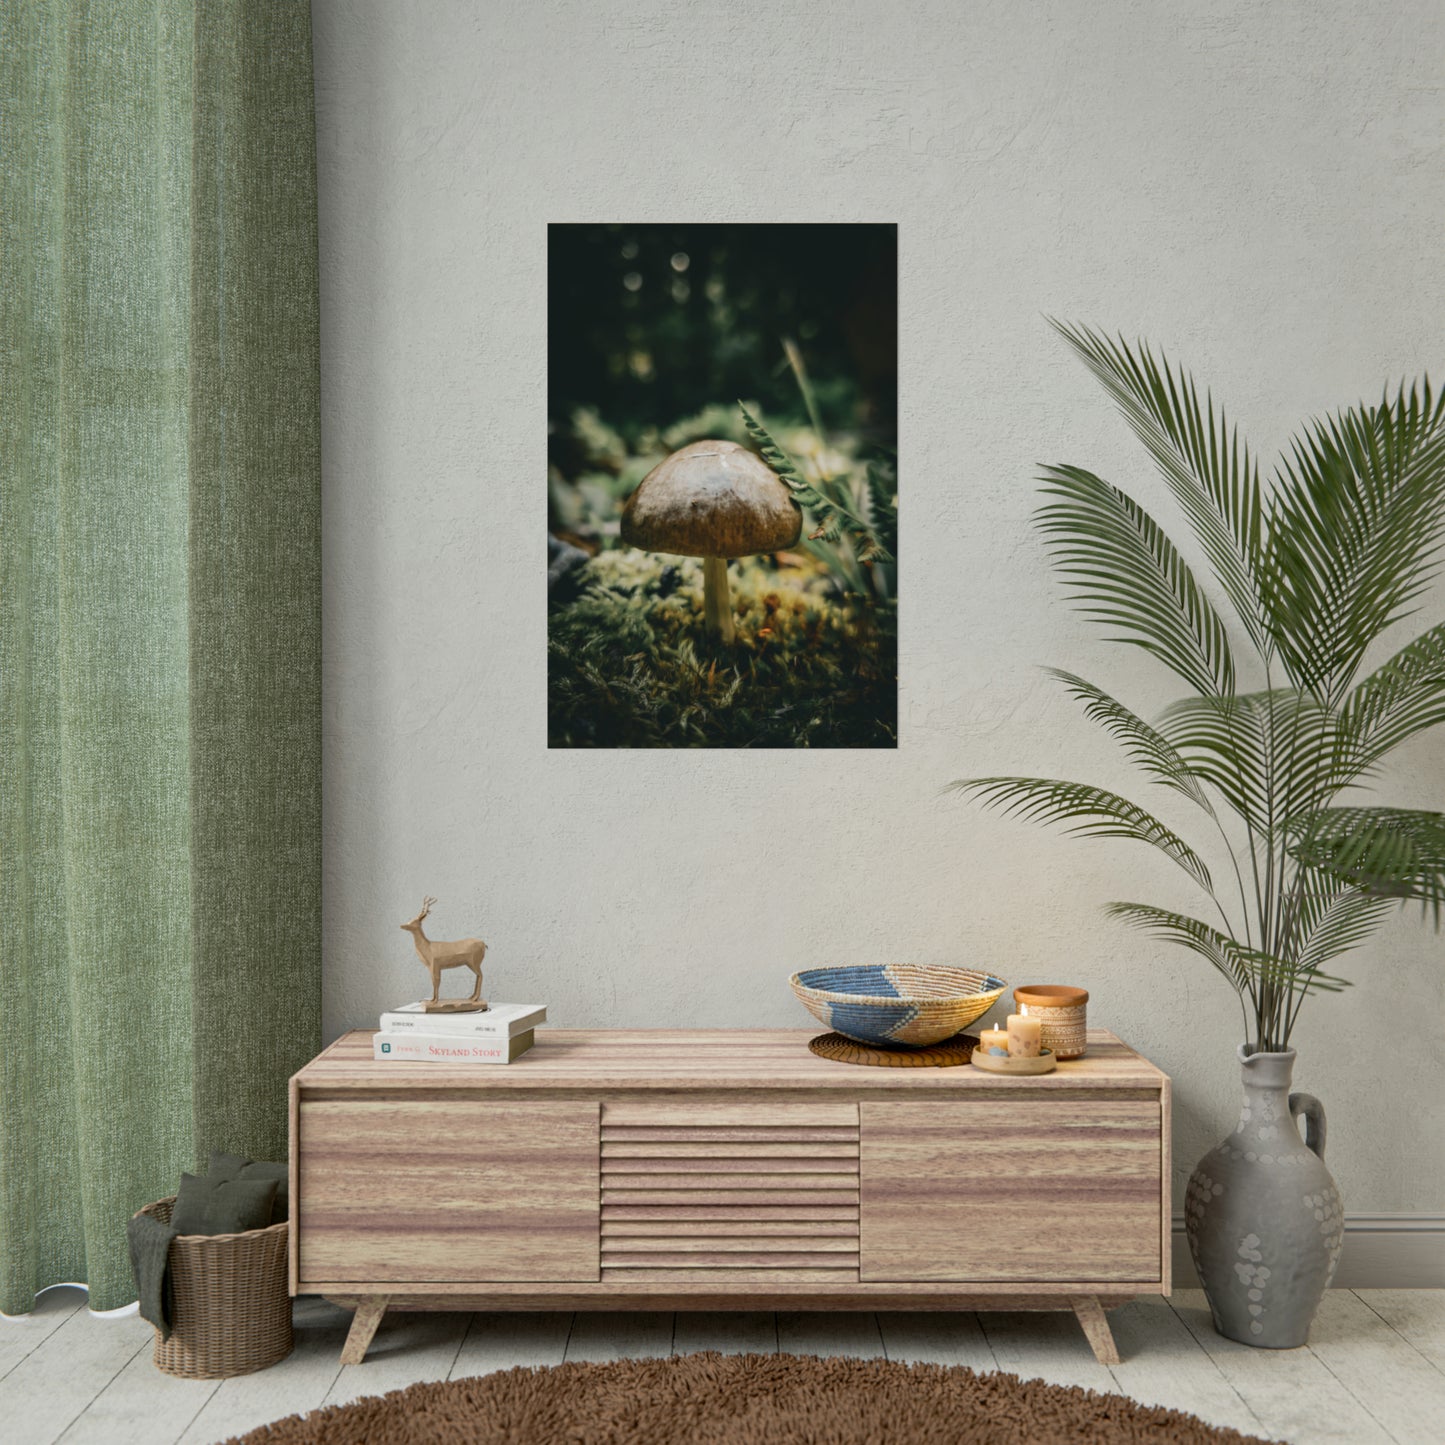 Mossy Mushroom House Fine Art Print